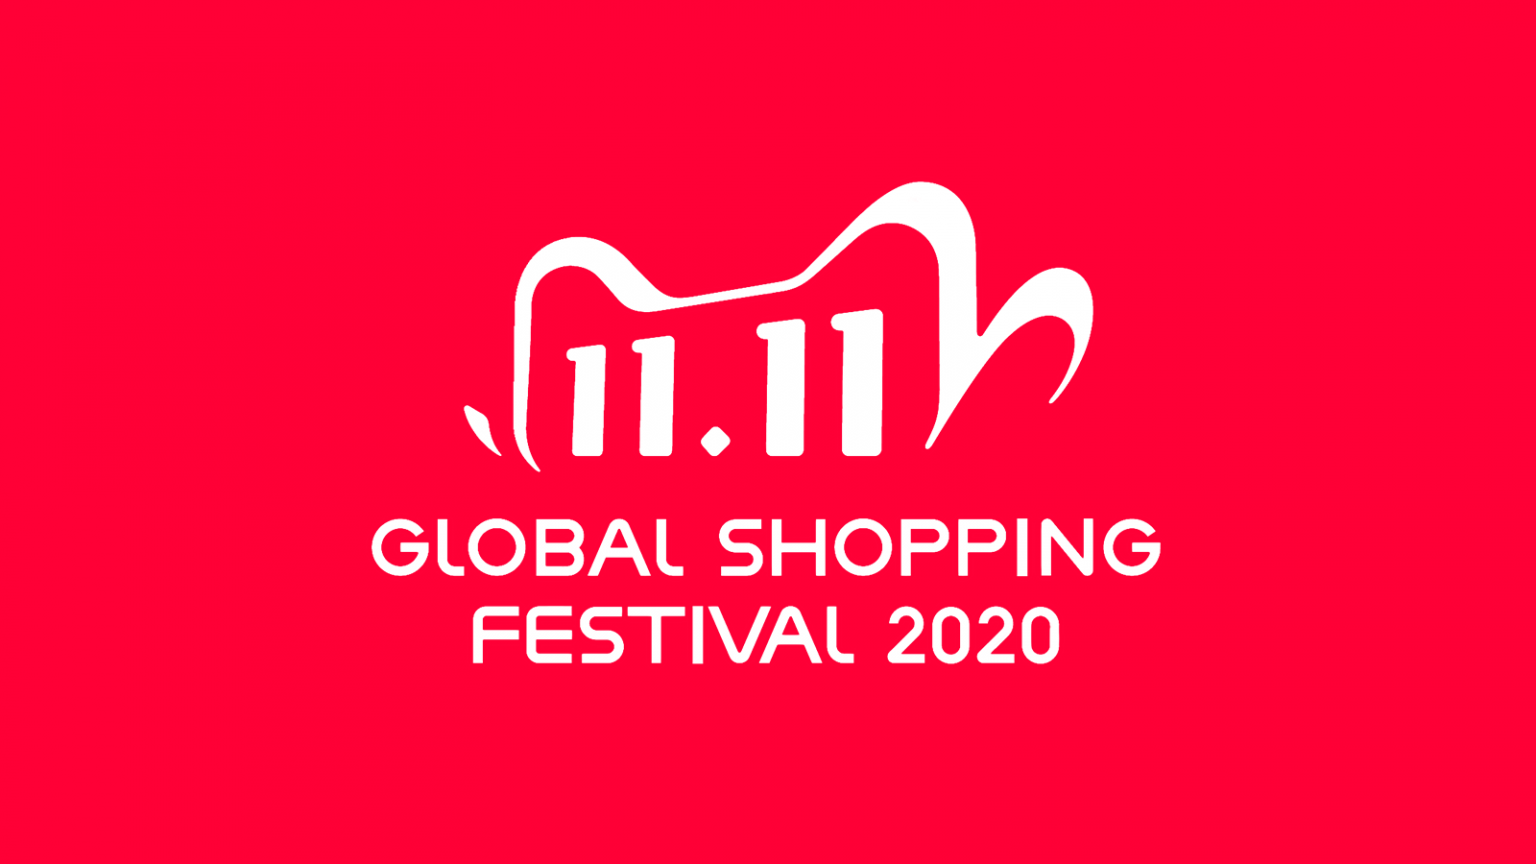 global shopping festival 11.11 China 2020